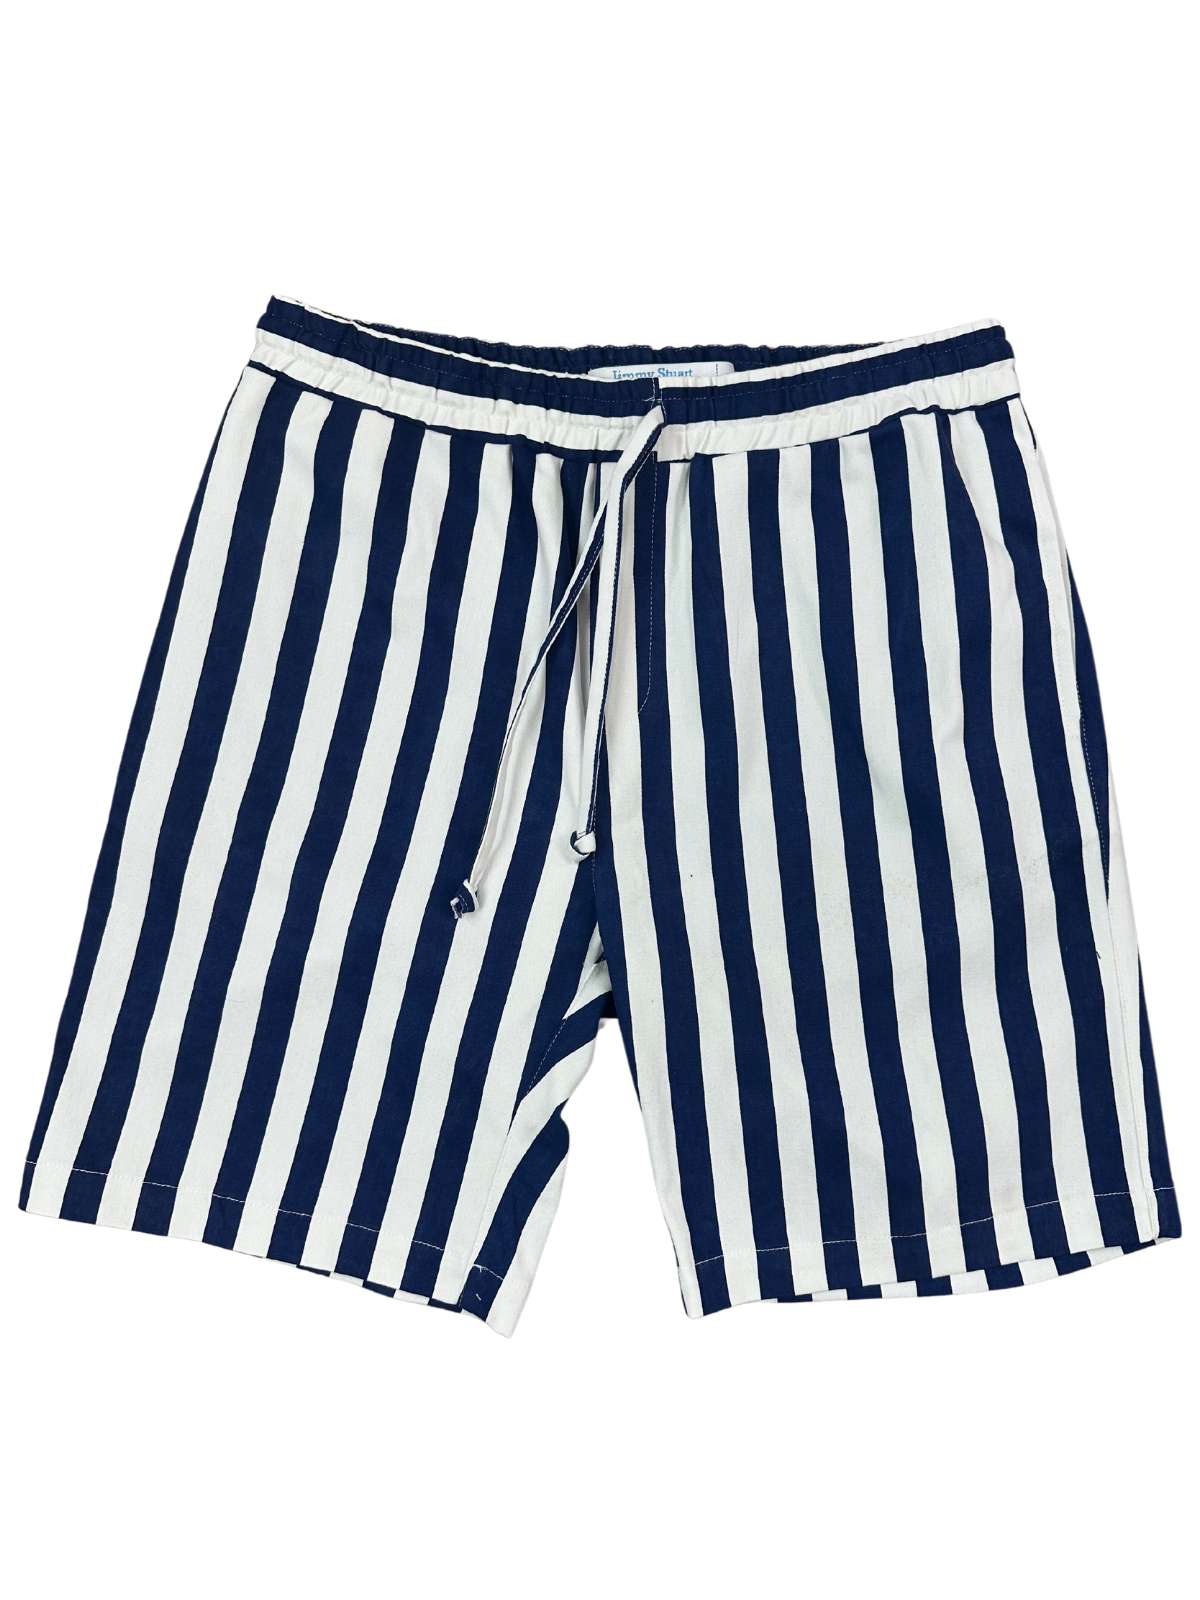 Maui Stripe Cotton Short - Blue/White